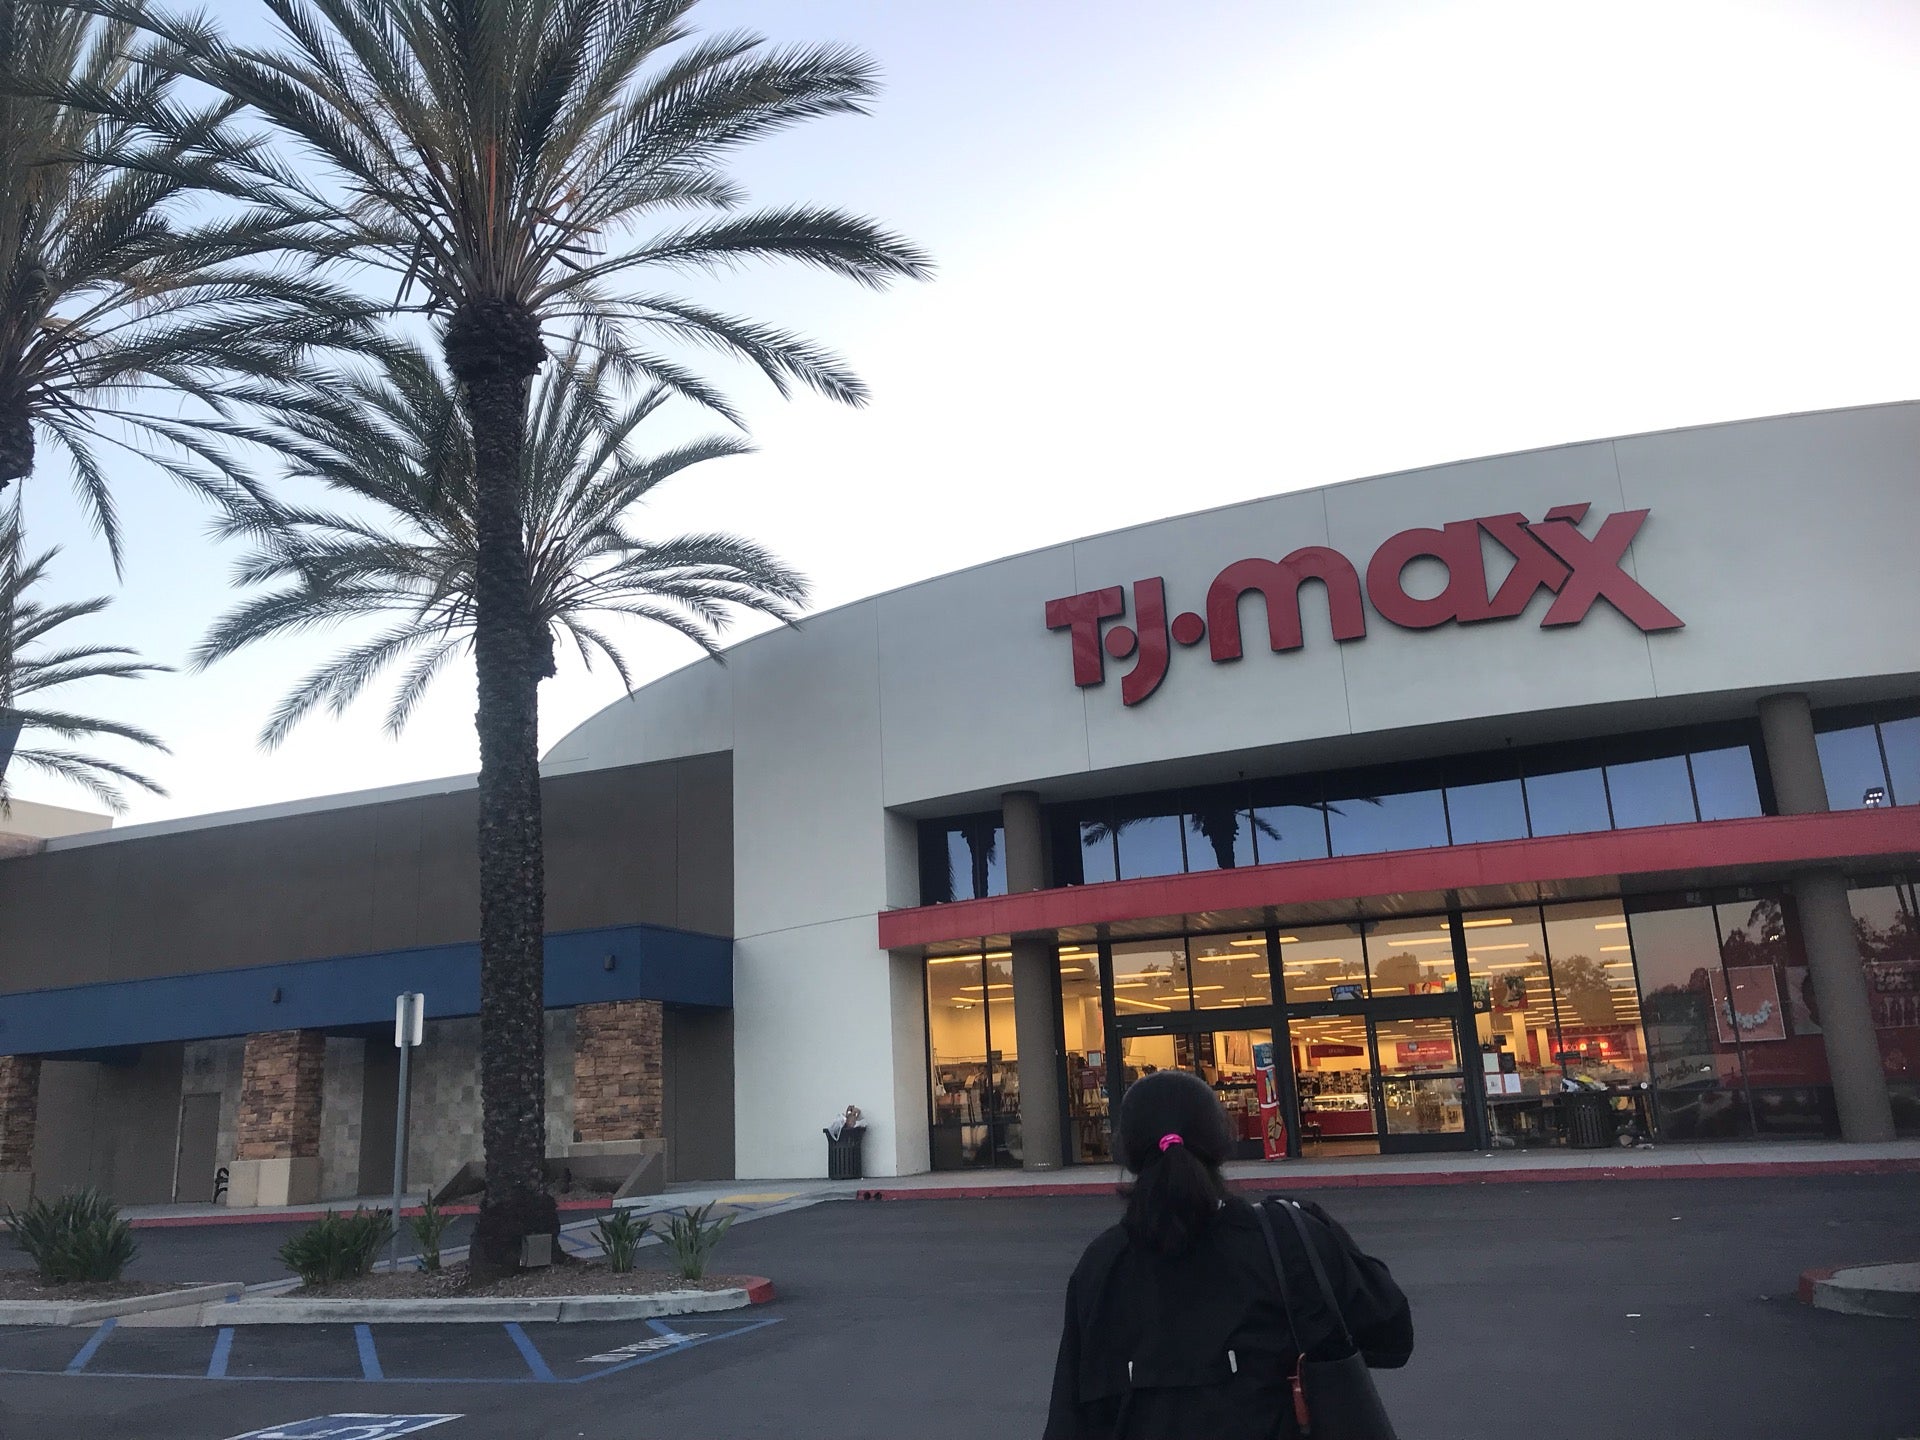 T.J. Maxx - Department Store in San Diego